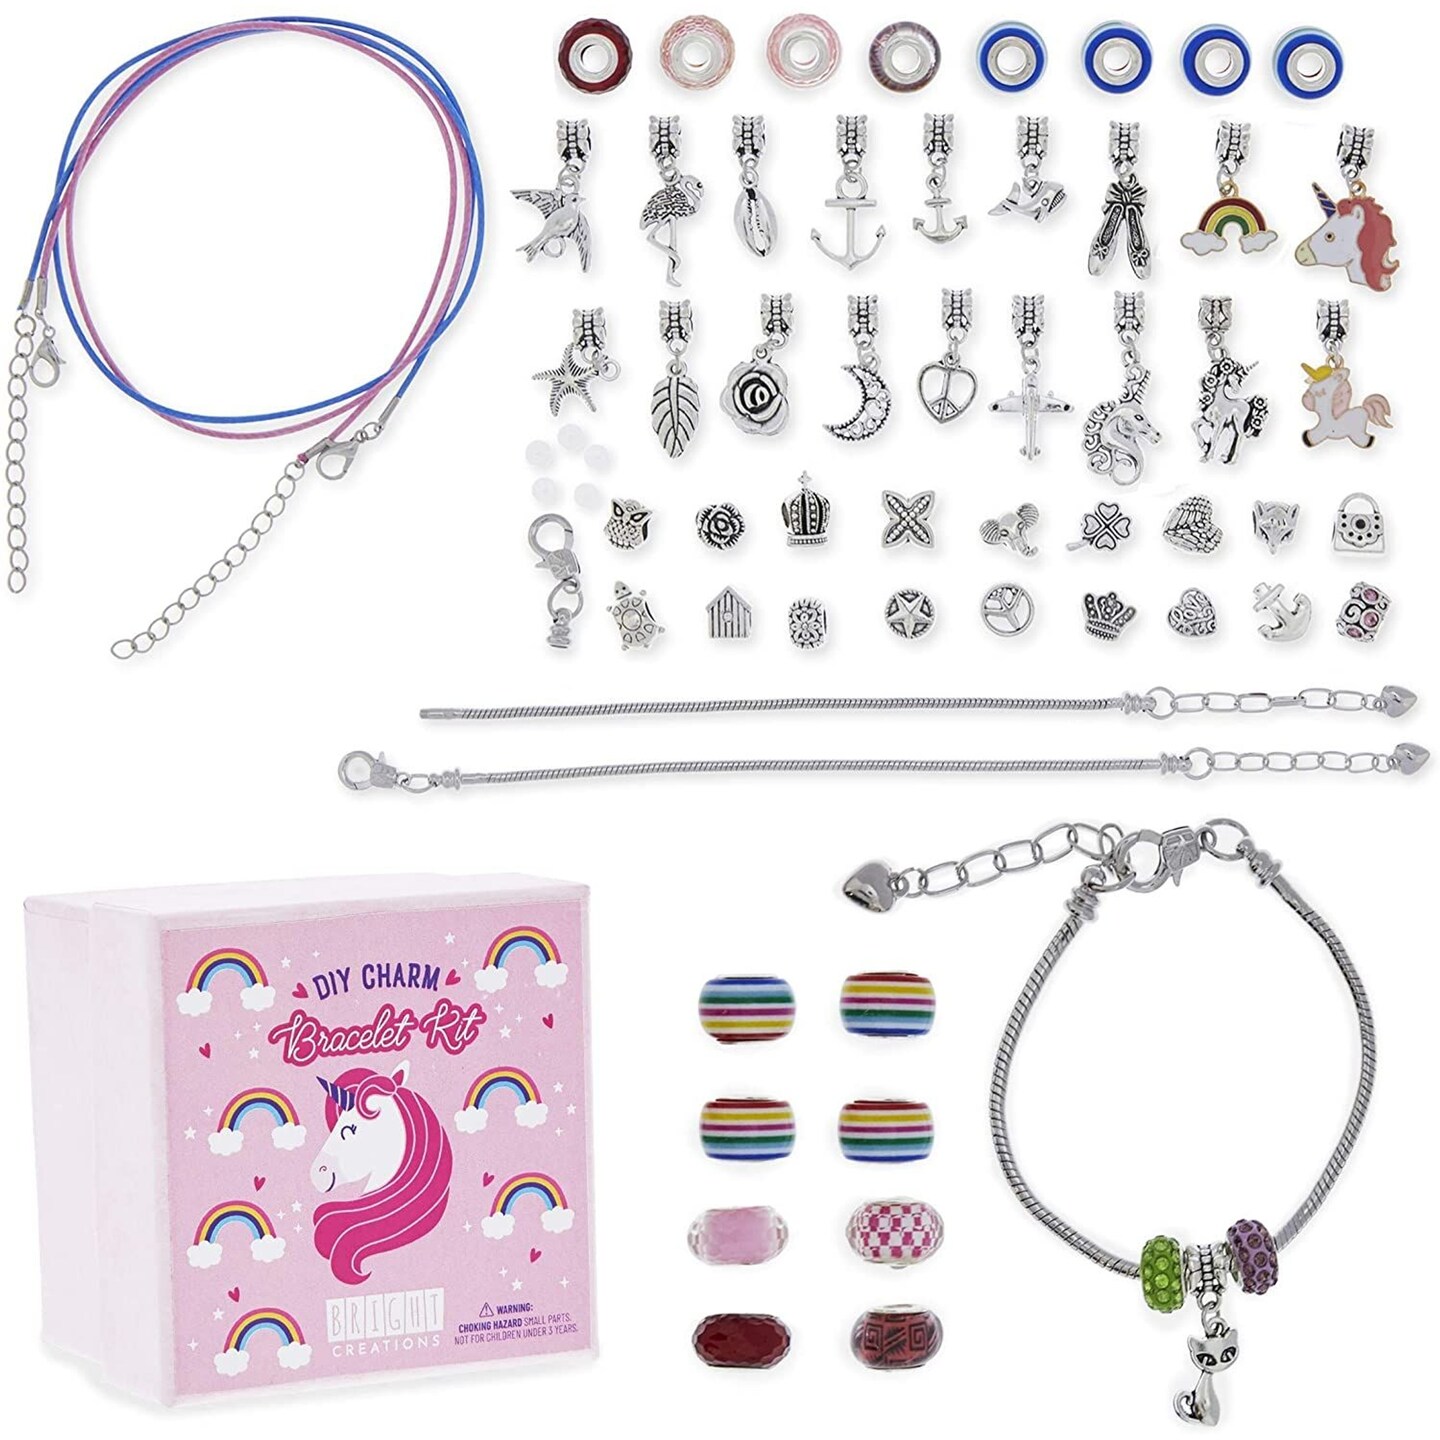 Bracelet Making Kit for Girls, 85PCs Charm Bracelets Kit with